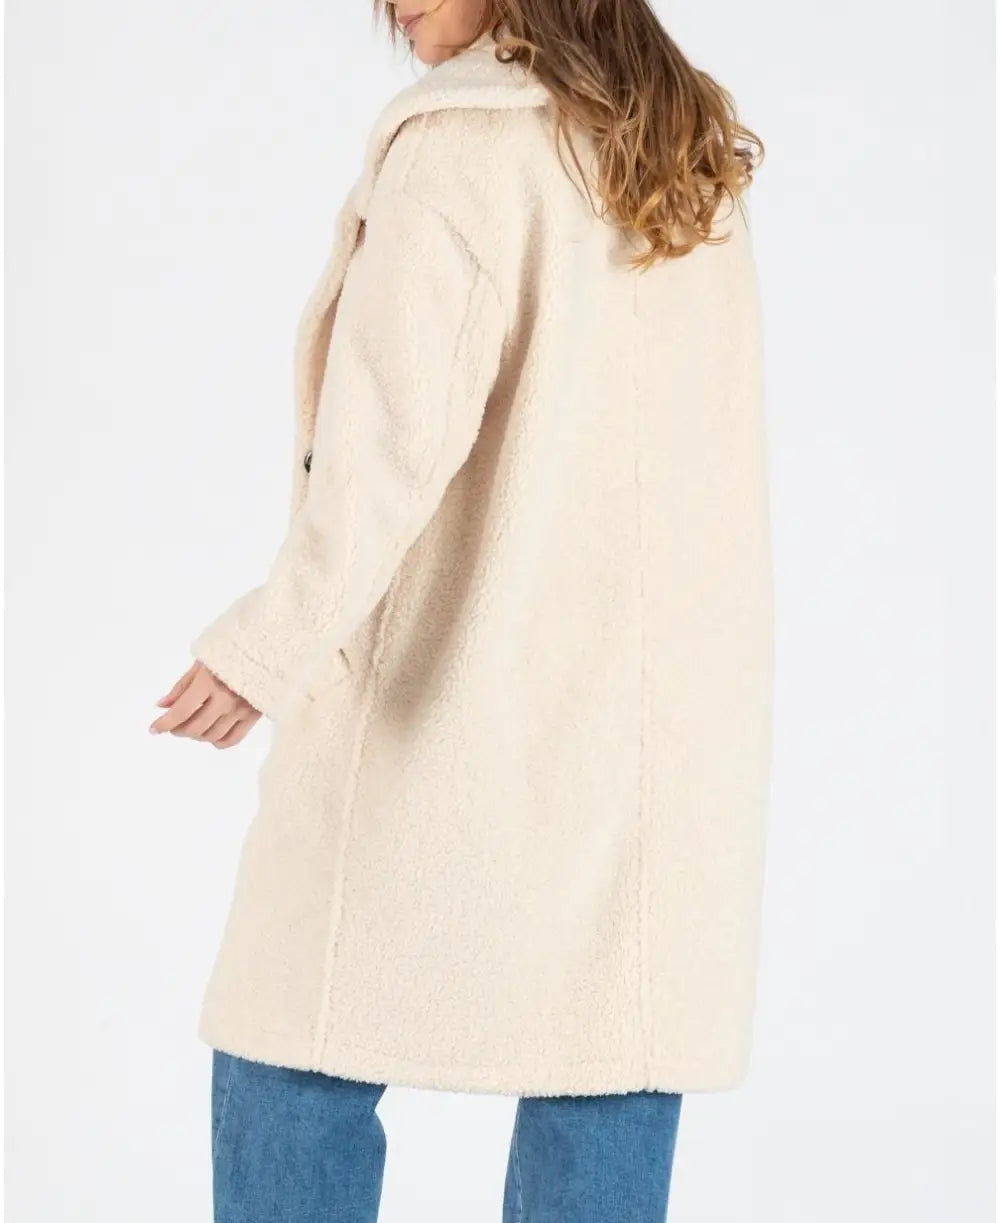 Long pregnancy coat Léonie beige - Coats and jackets